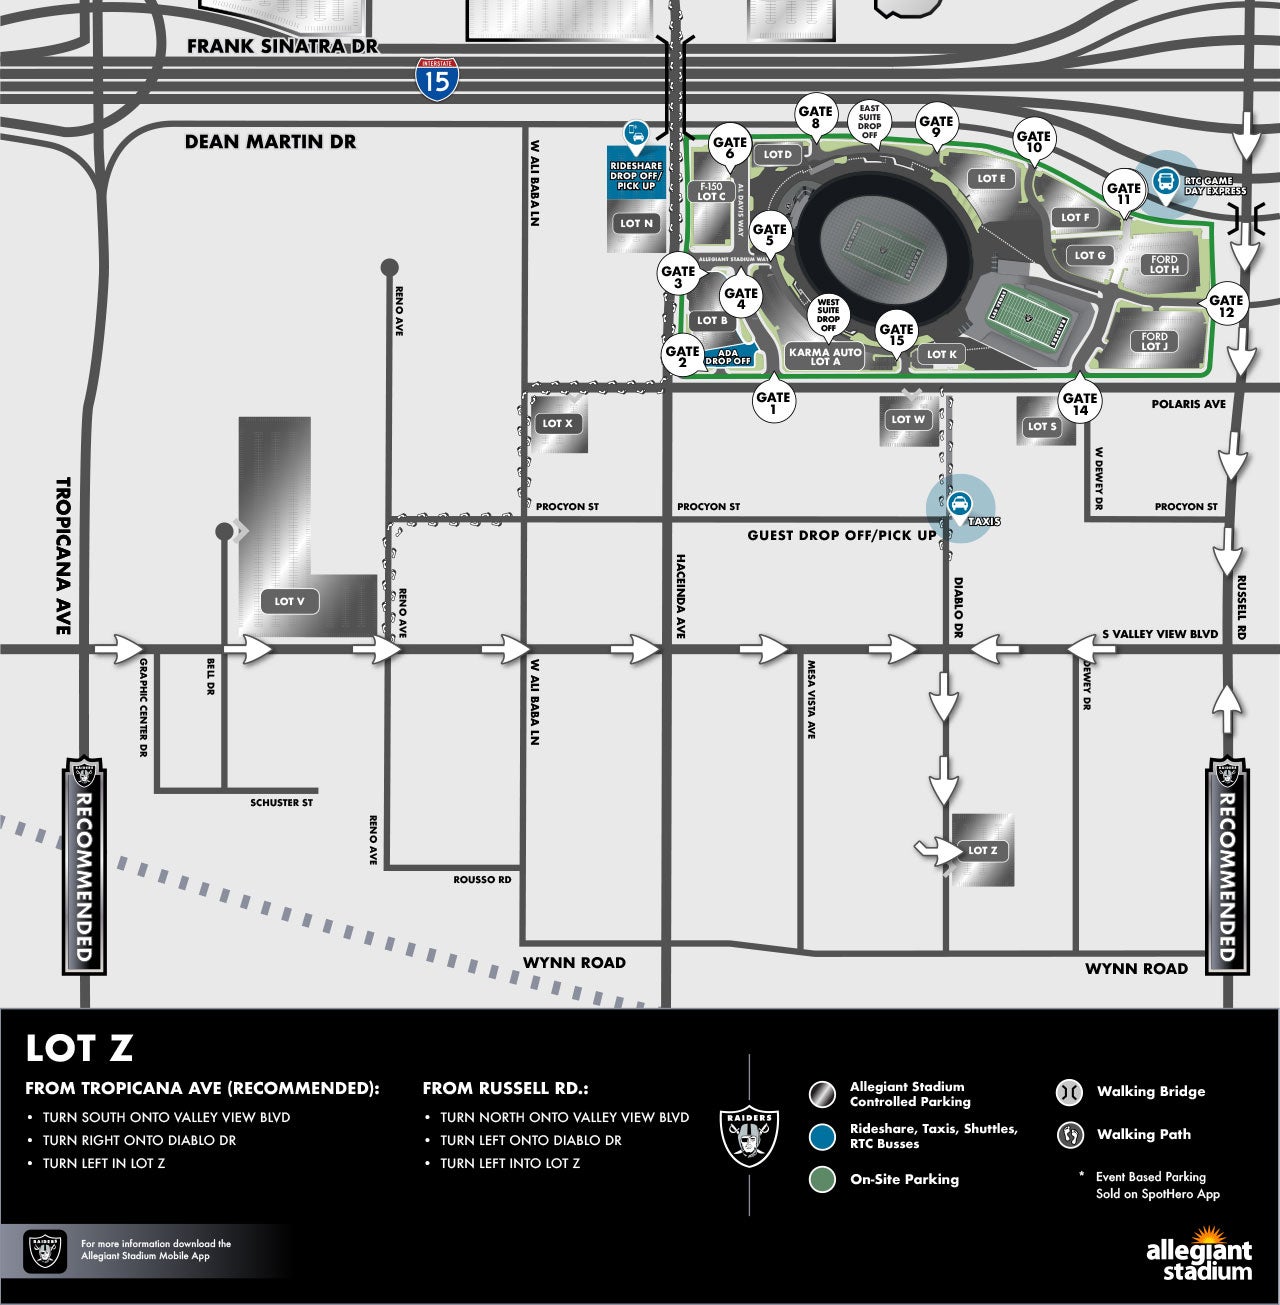 Lot Z Parking Map